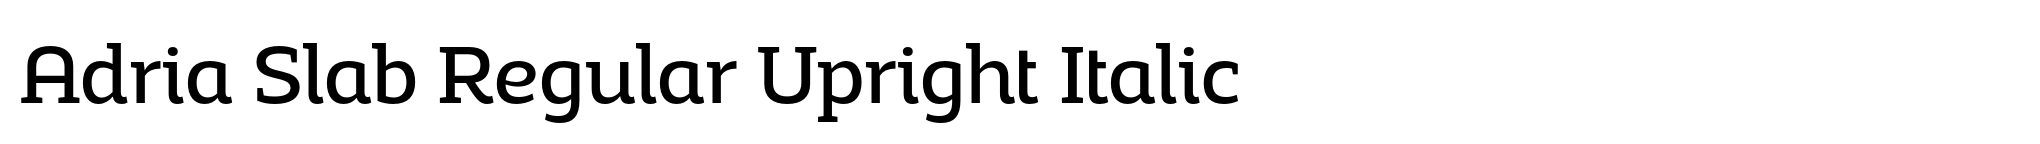 Adria Slab Regular Upright Italic image